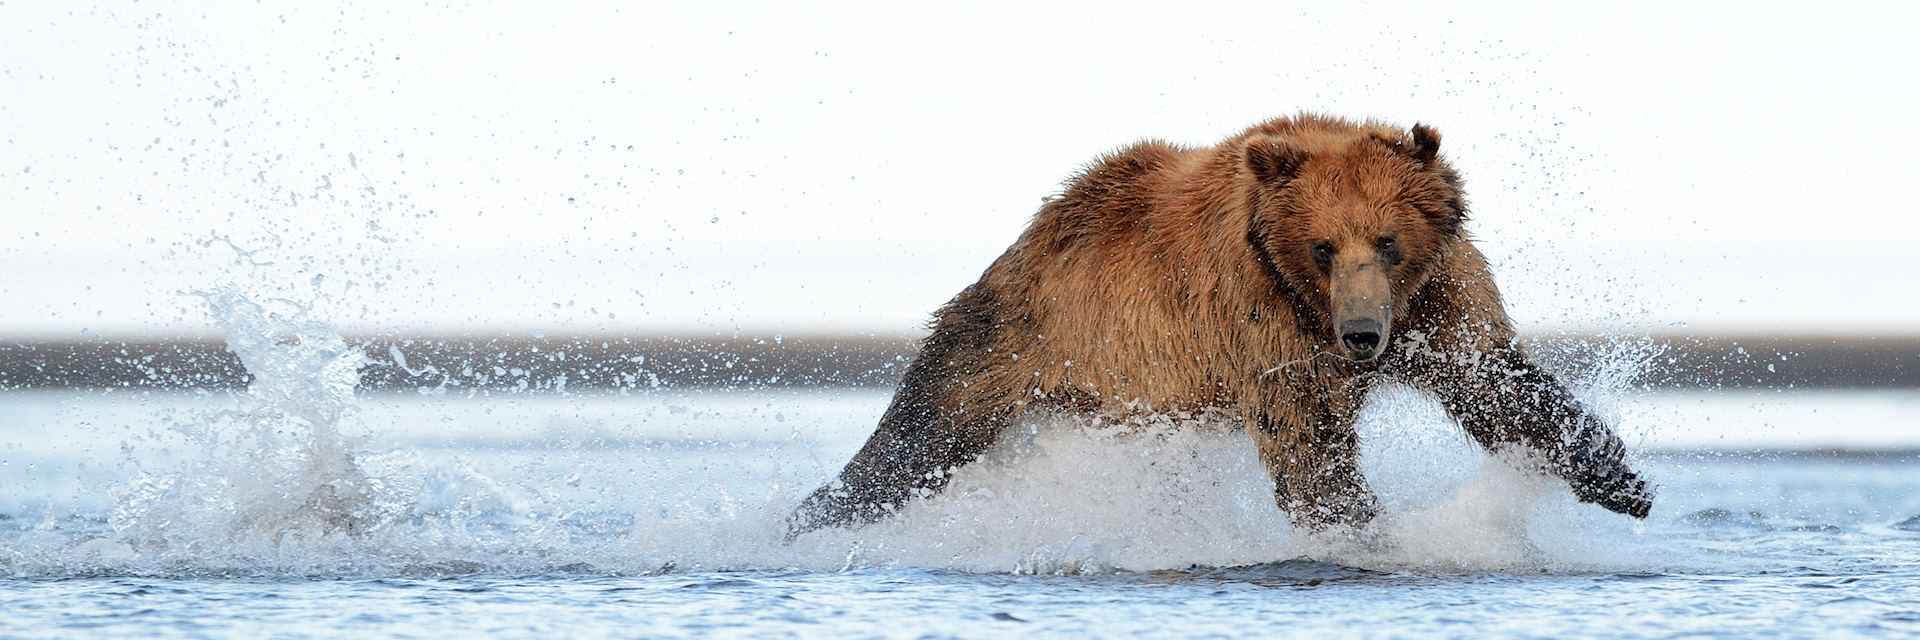 Grizzly bear, Alaska